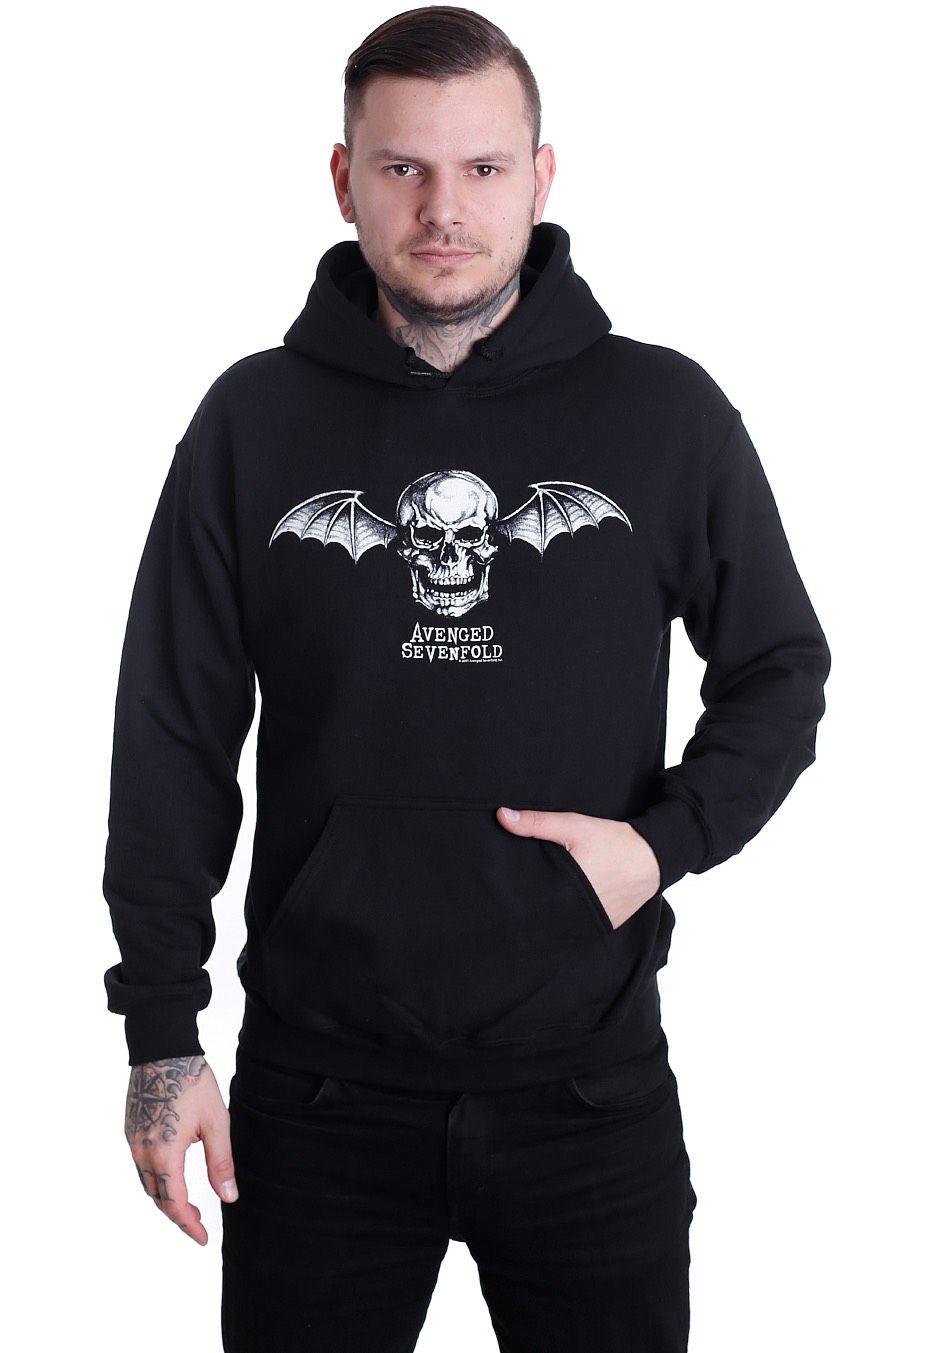 Avenged Sevenfold Death Bat Logo - Avenged Sevenfold - Death Bat Logo - Hoodie - Official Metal ...